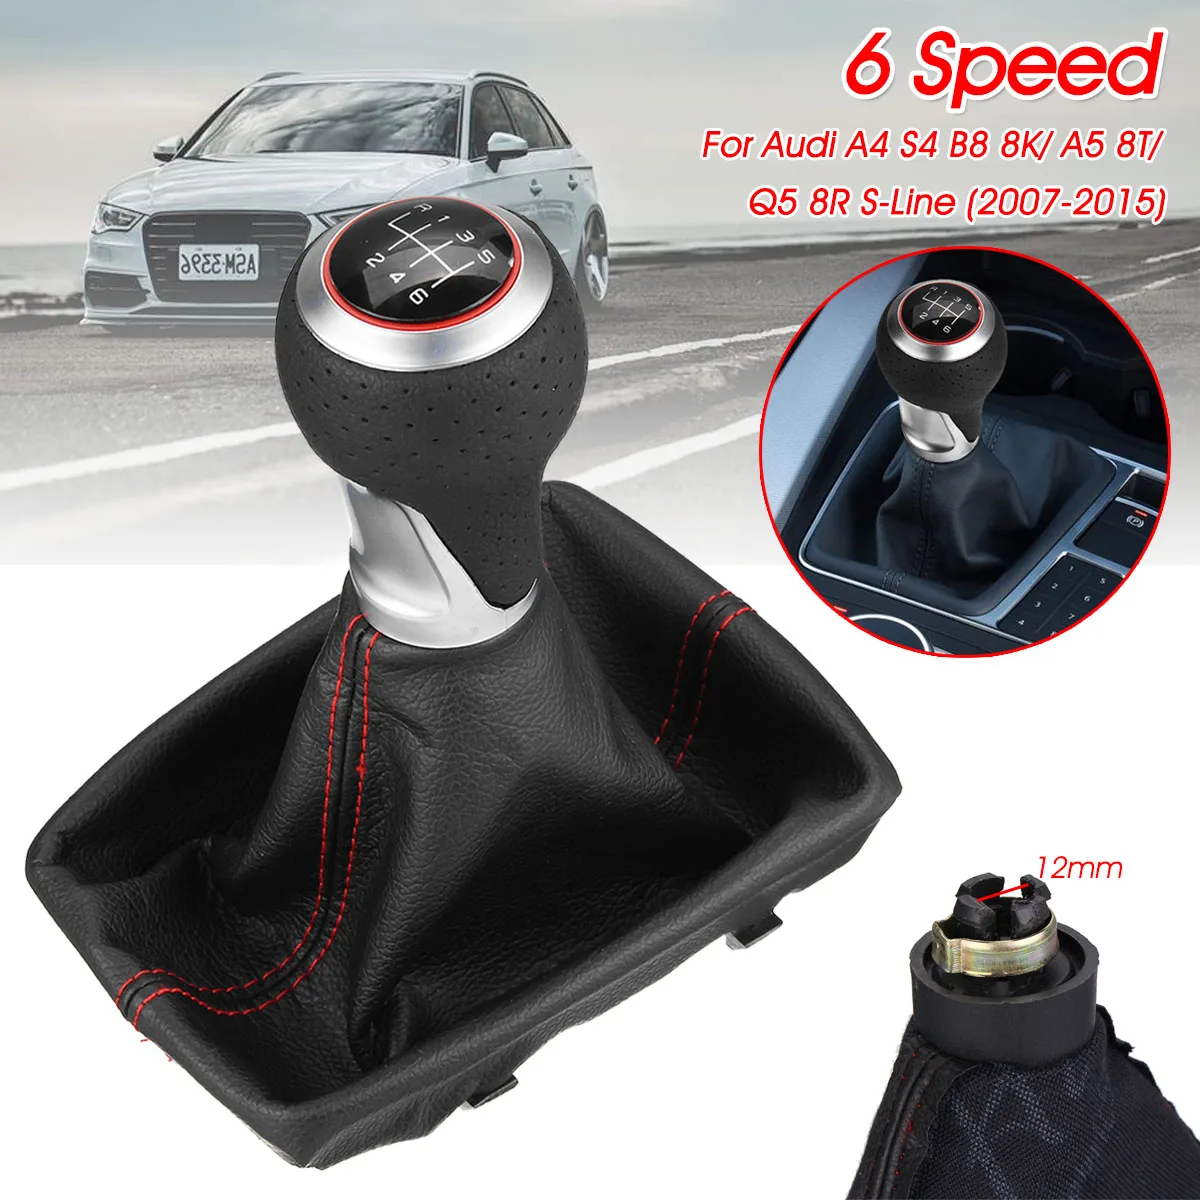 6 Speed Car Manual Gear Shift Knob PU Leather Gaiter Boot Cover For Audi A4 S4 8K A5 8T Q5 8R S-Line 2007 - Название цвета: Красный